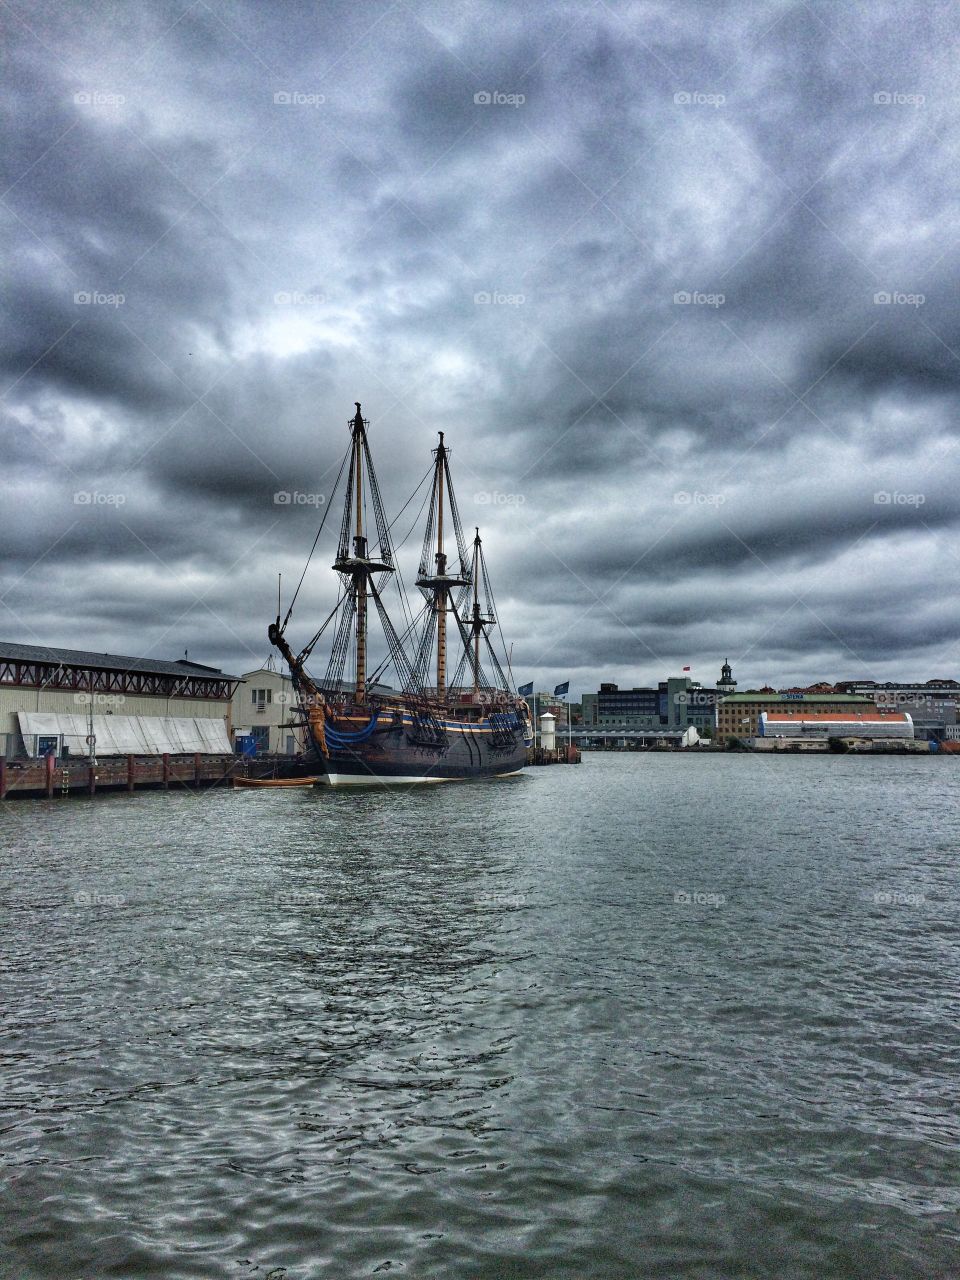 Cloudy Gothenburg and a beautiful ship 